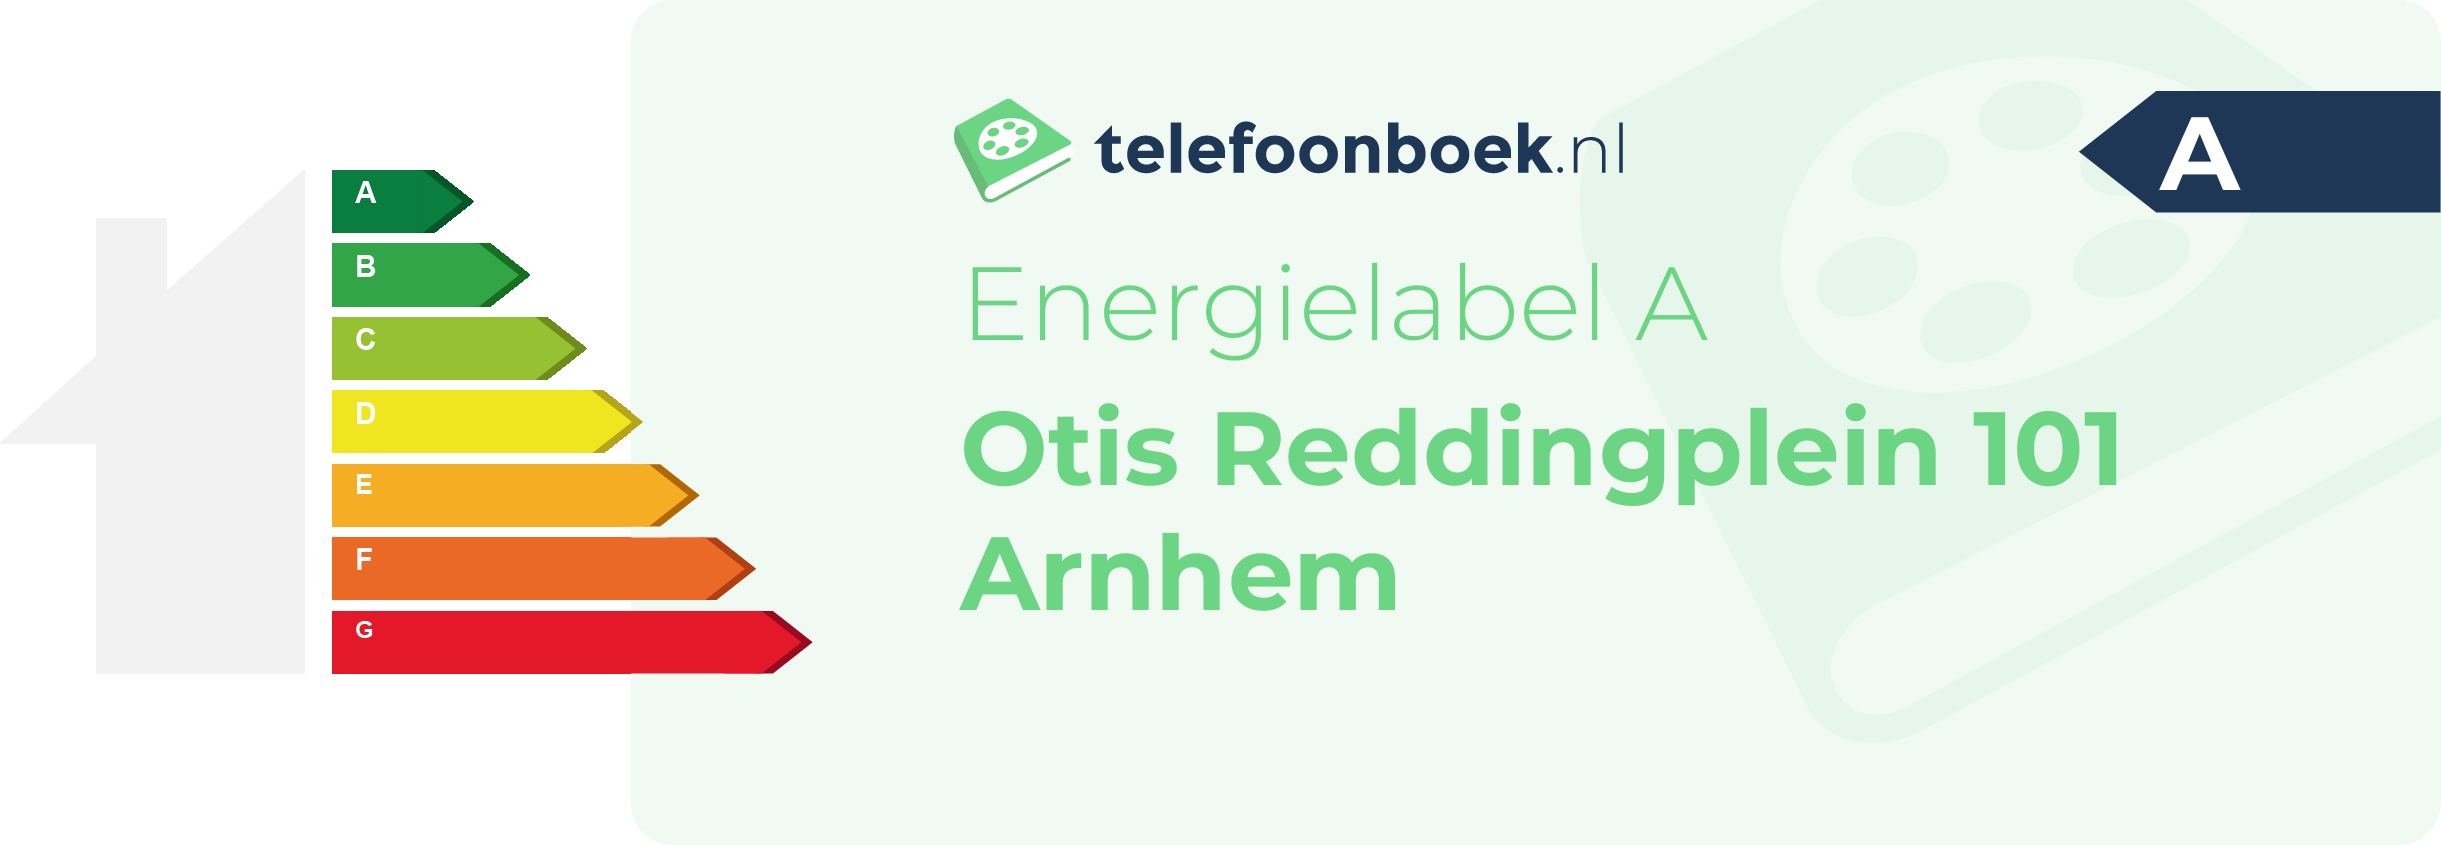 Energielabel Otis Reddingplein 101 Arnhem